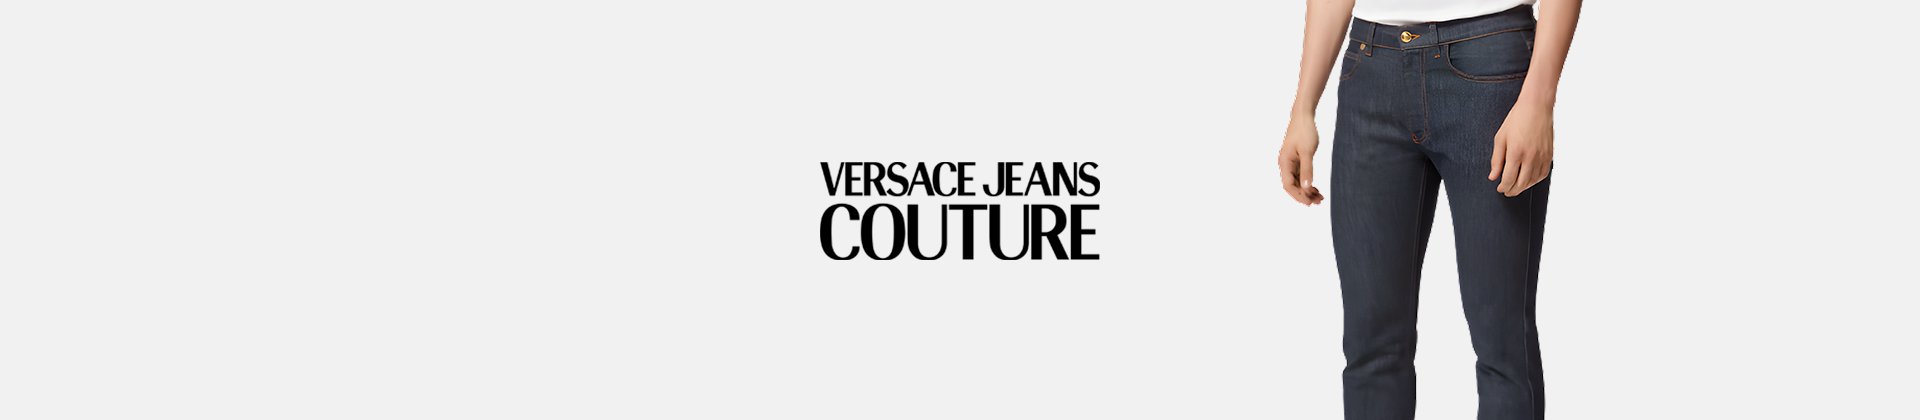 Versace Jeans Women's Shoes Online